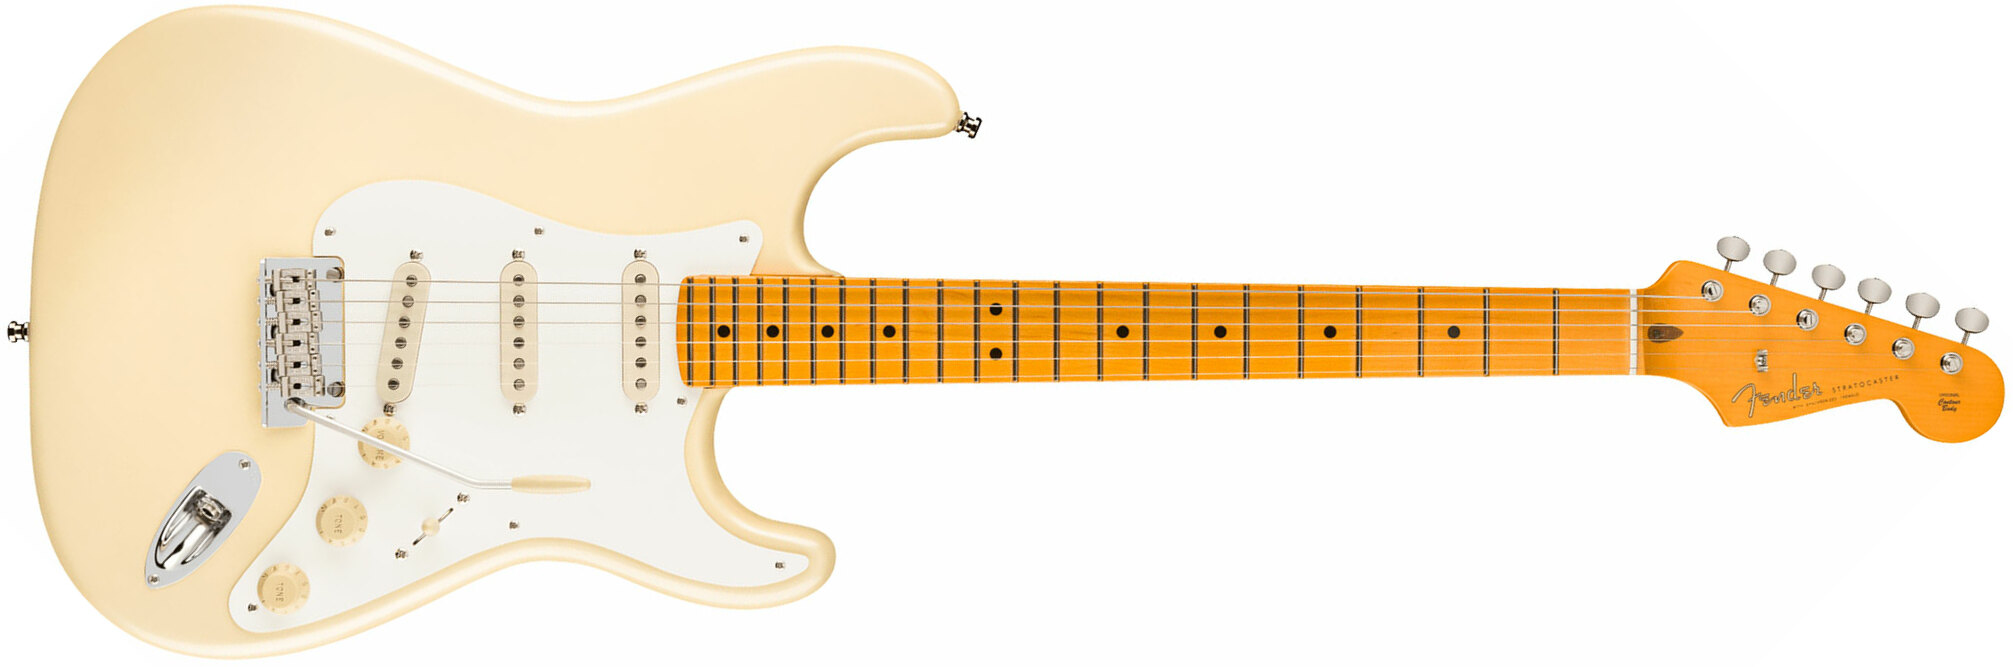 Fender Lincoln Brewster Strat Usa Signature 3s Dimarzio Trem Mn - Olympic Pearl - Retro-rock elektrische gitaar - Main picture